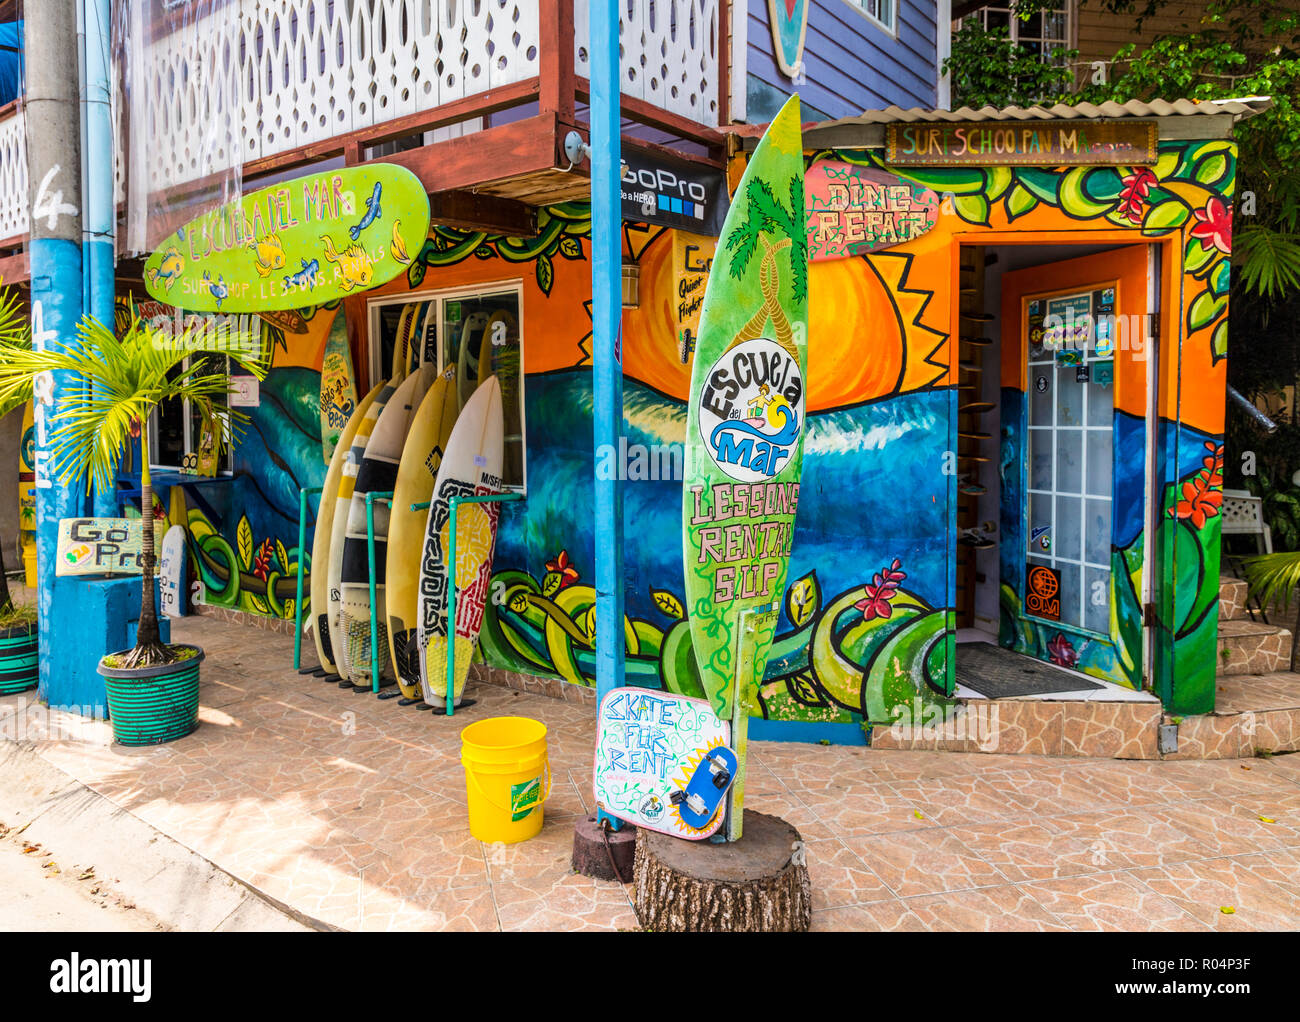 A colourful local surf school and rental shop in Bocas Town, Colon Island, Bocas del Toro Islands, Panama, Central America Stock Photo